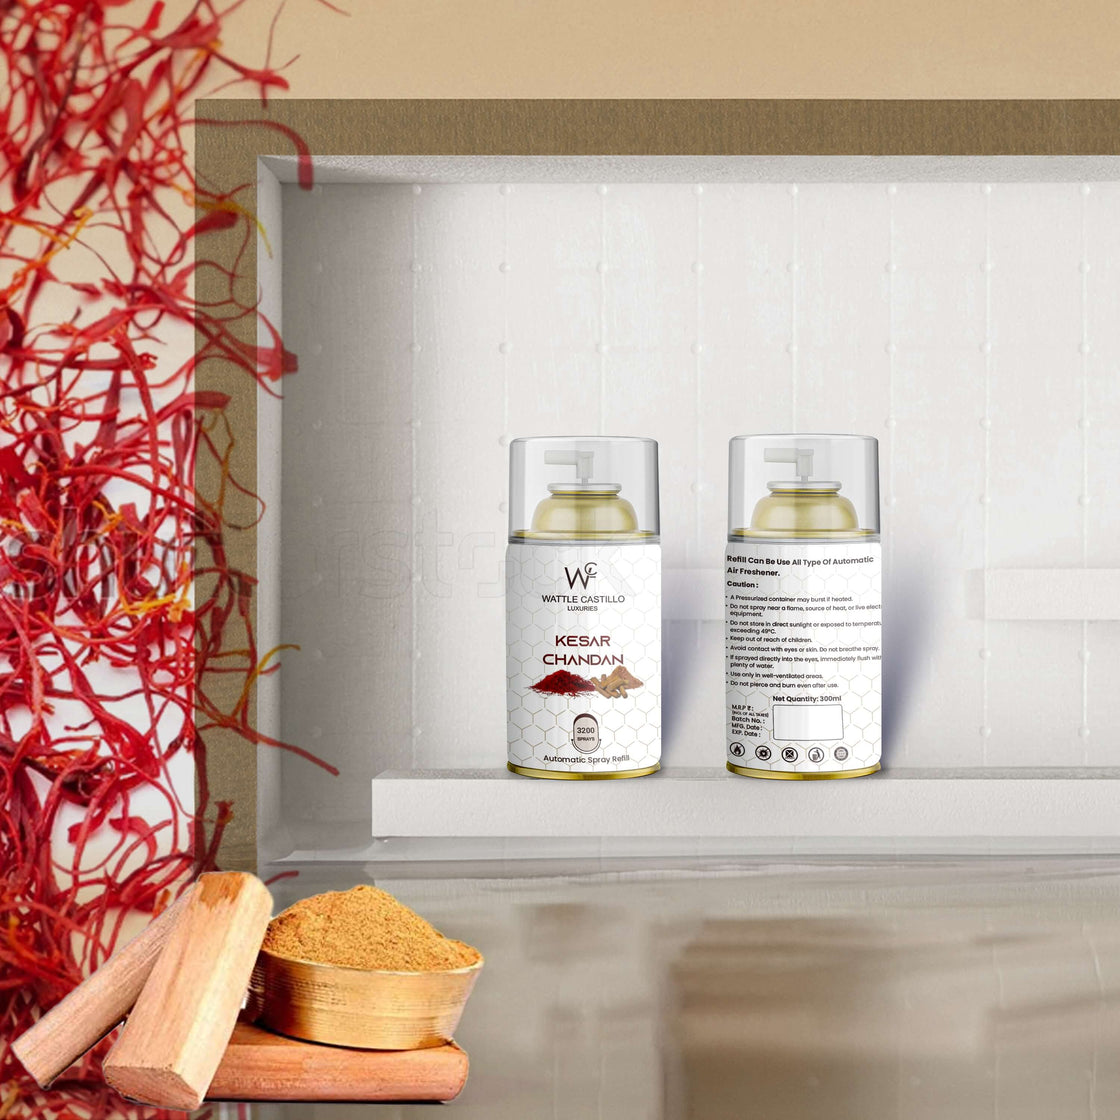 Wattle castillo Automatic Dispenser Refill - Automatic Room Fresheners Combo | Kesar chandan and Lemon (300ml) - Wattle Castillo